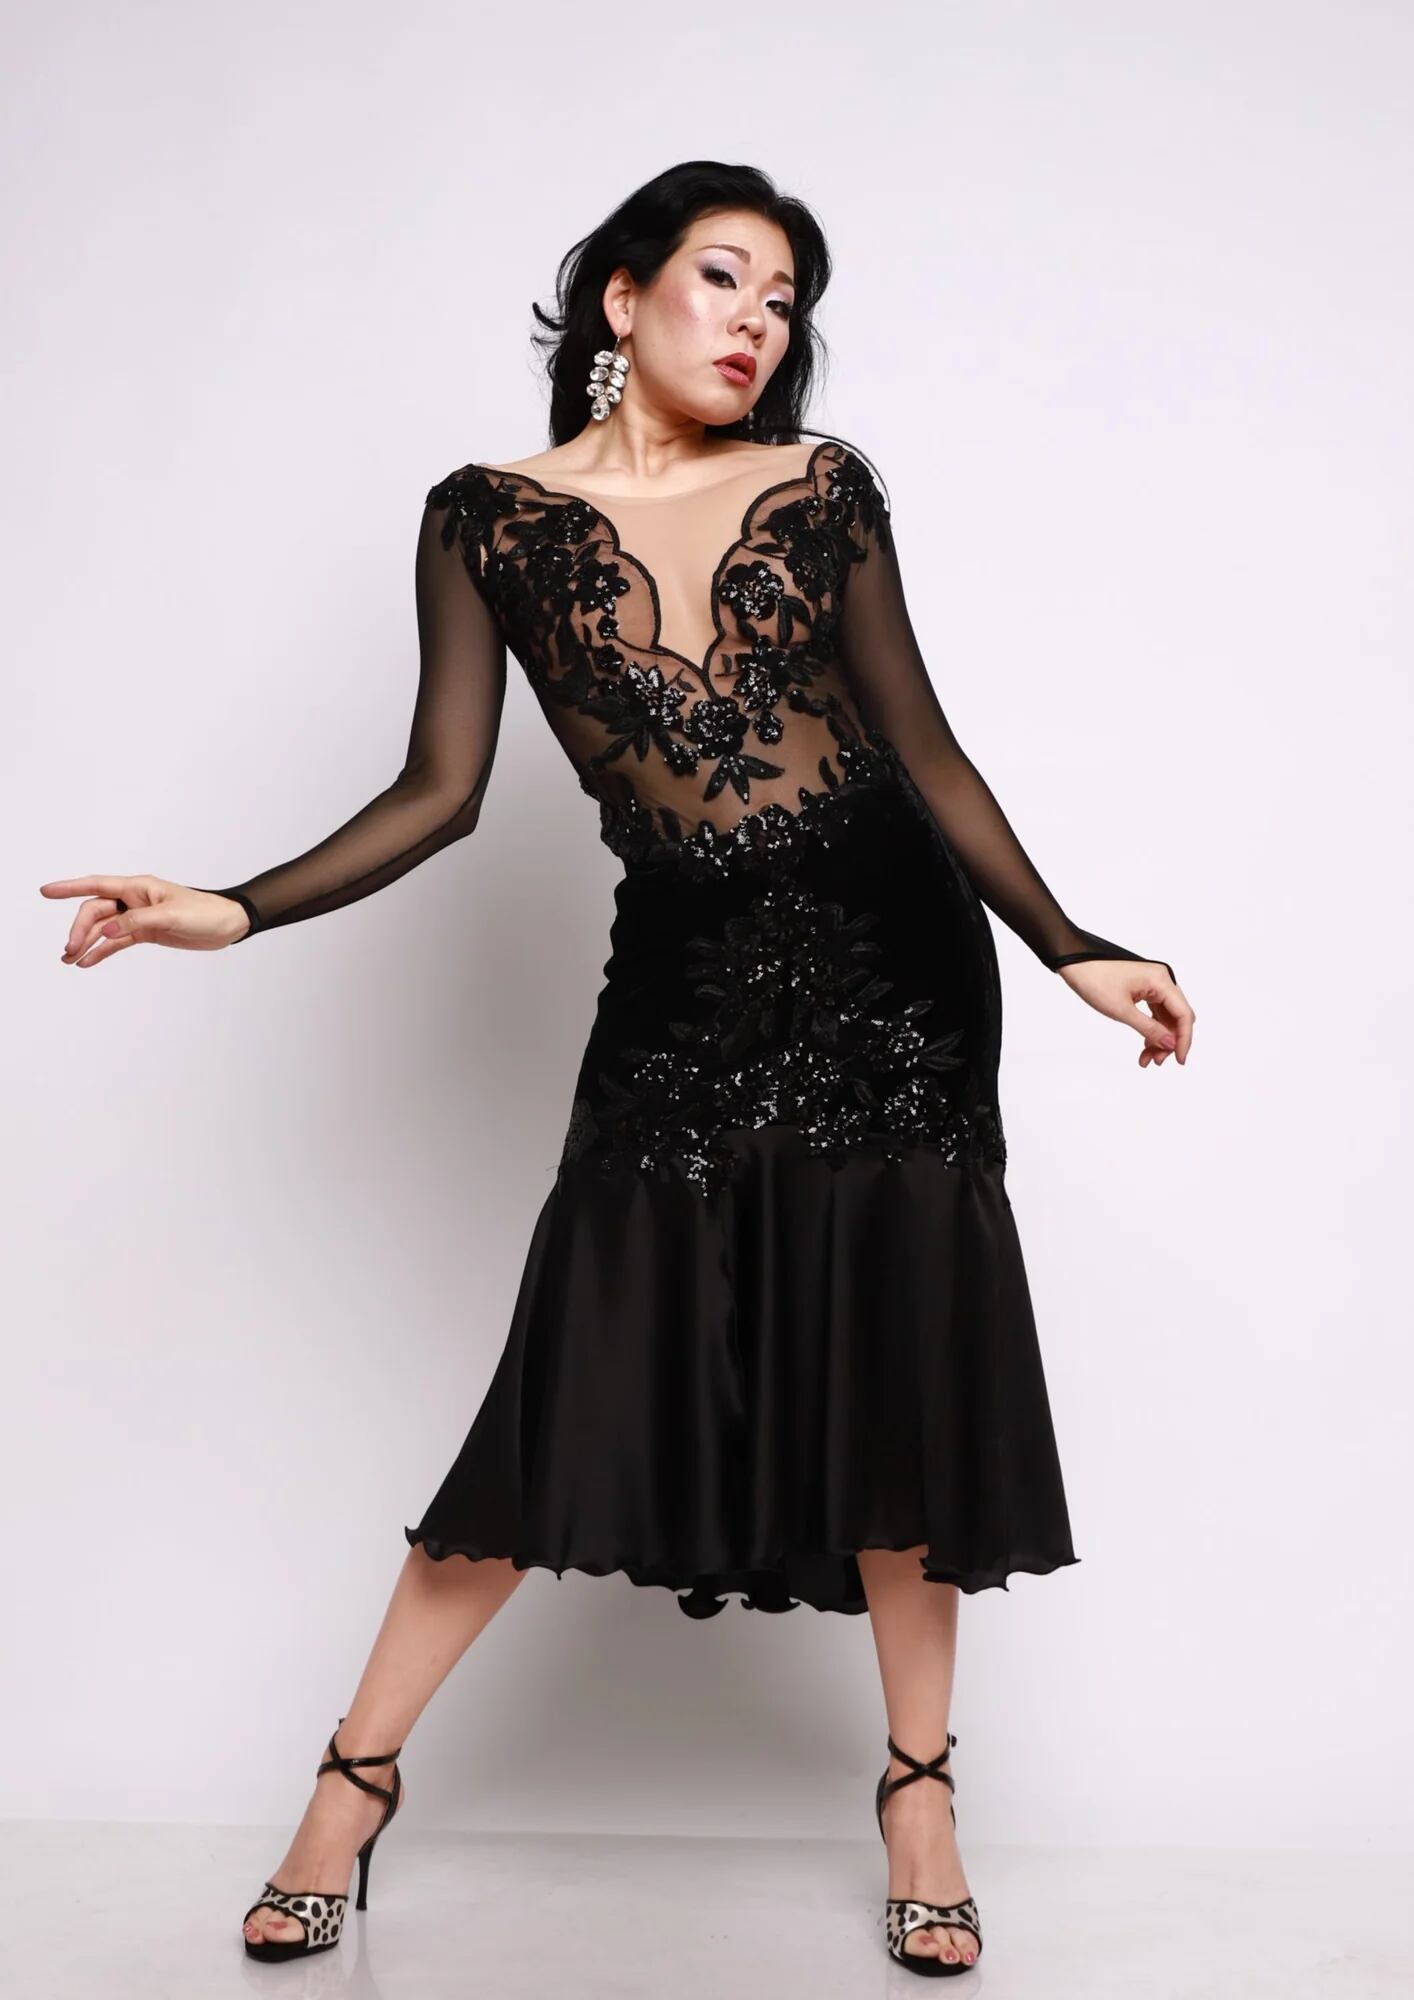 VESTIDO DE MIMI PINZON　ステージ用　黒色ベロア×レース長袖ドレス